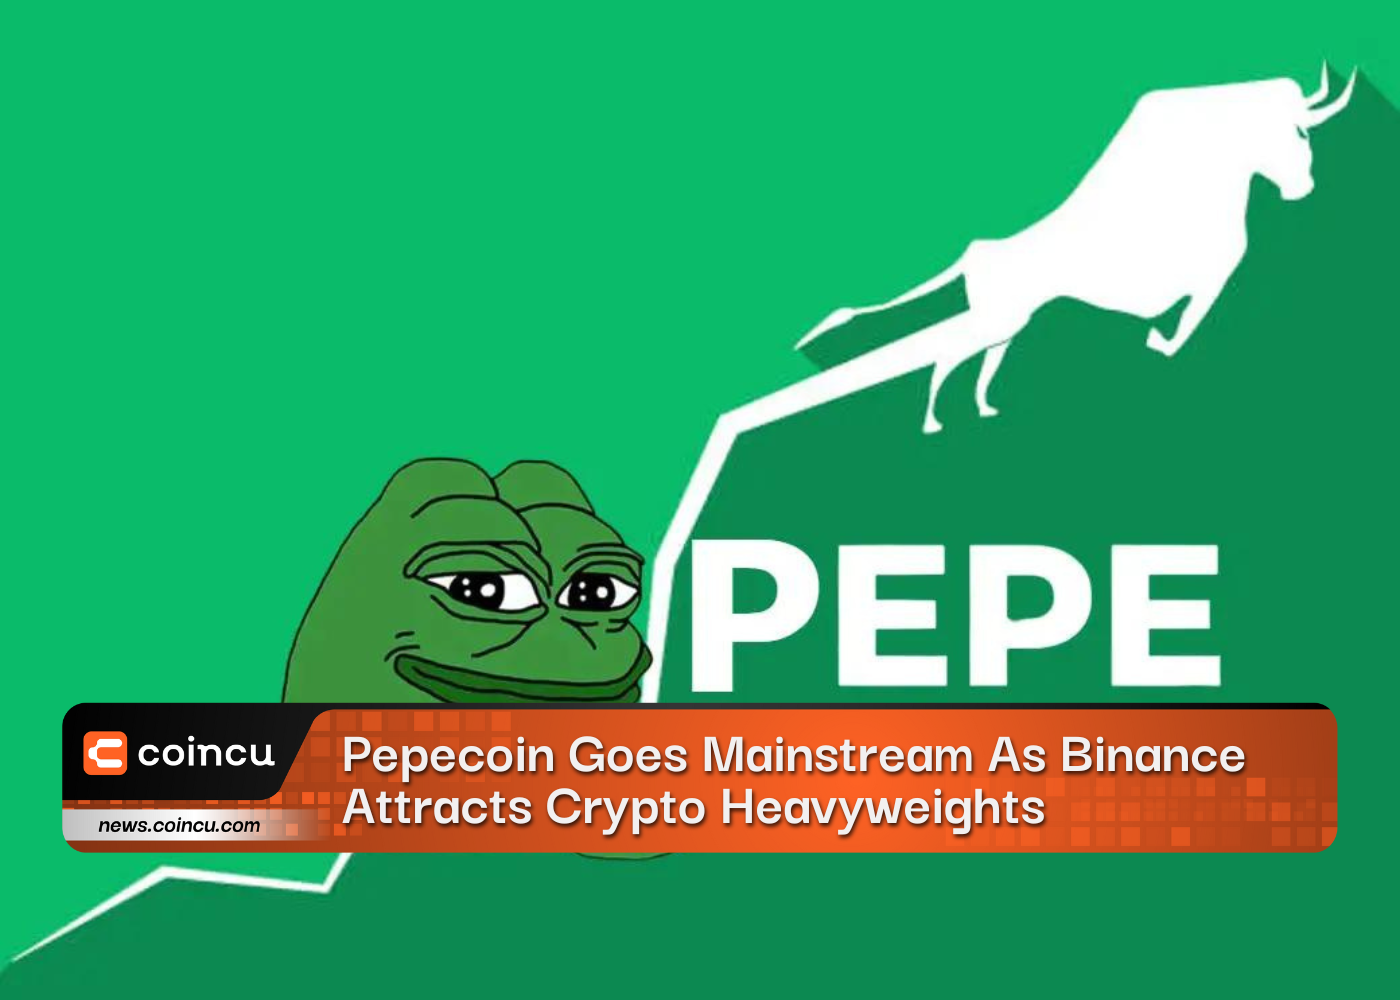 Pepecoin Goes Mainstream As Binance